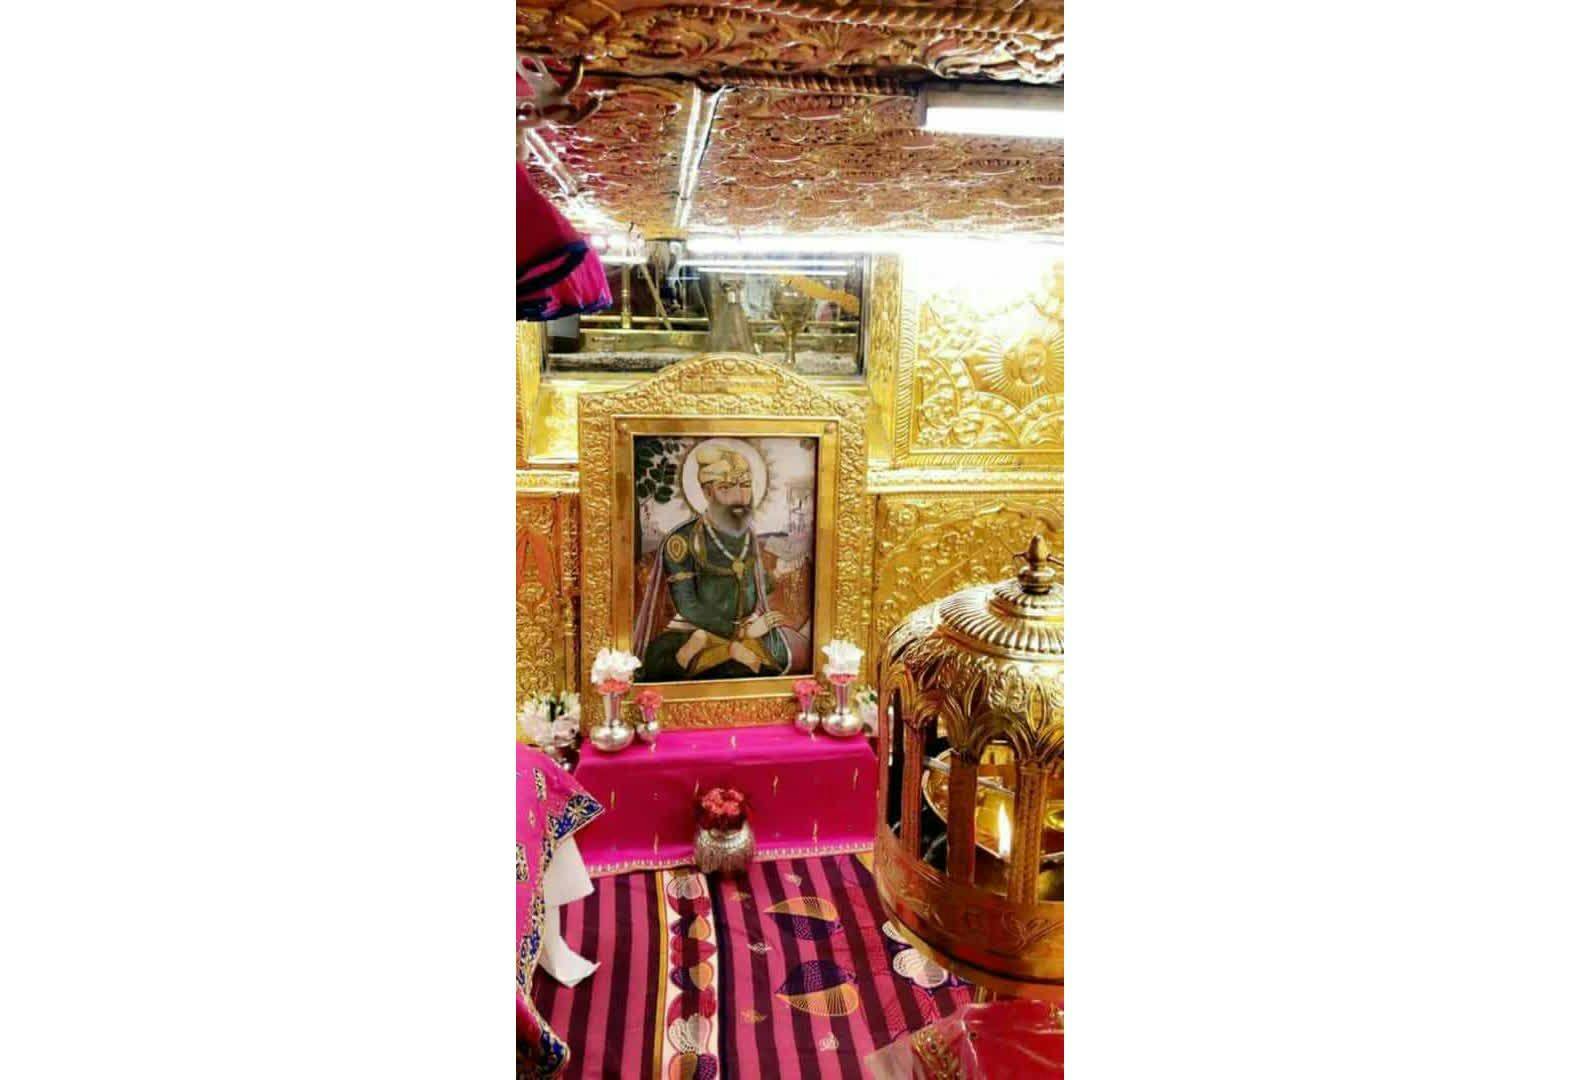 Portrait of Guru Tegh Bahadur at the Gurudwara Sis Ganj, Delhi